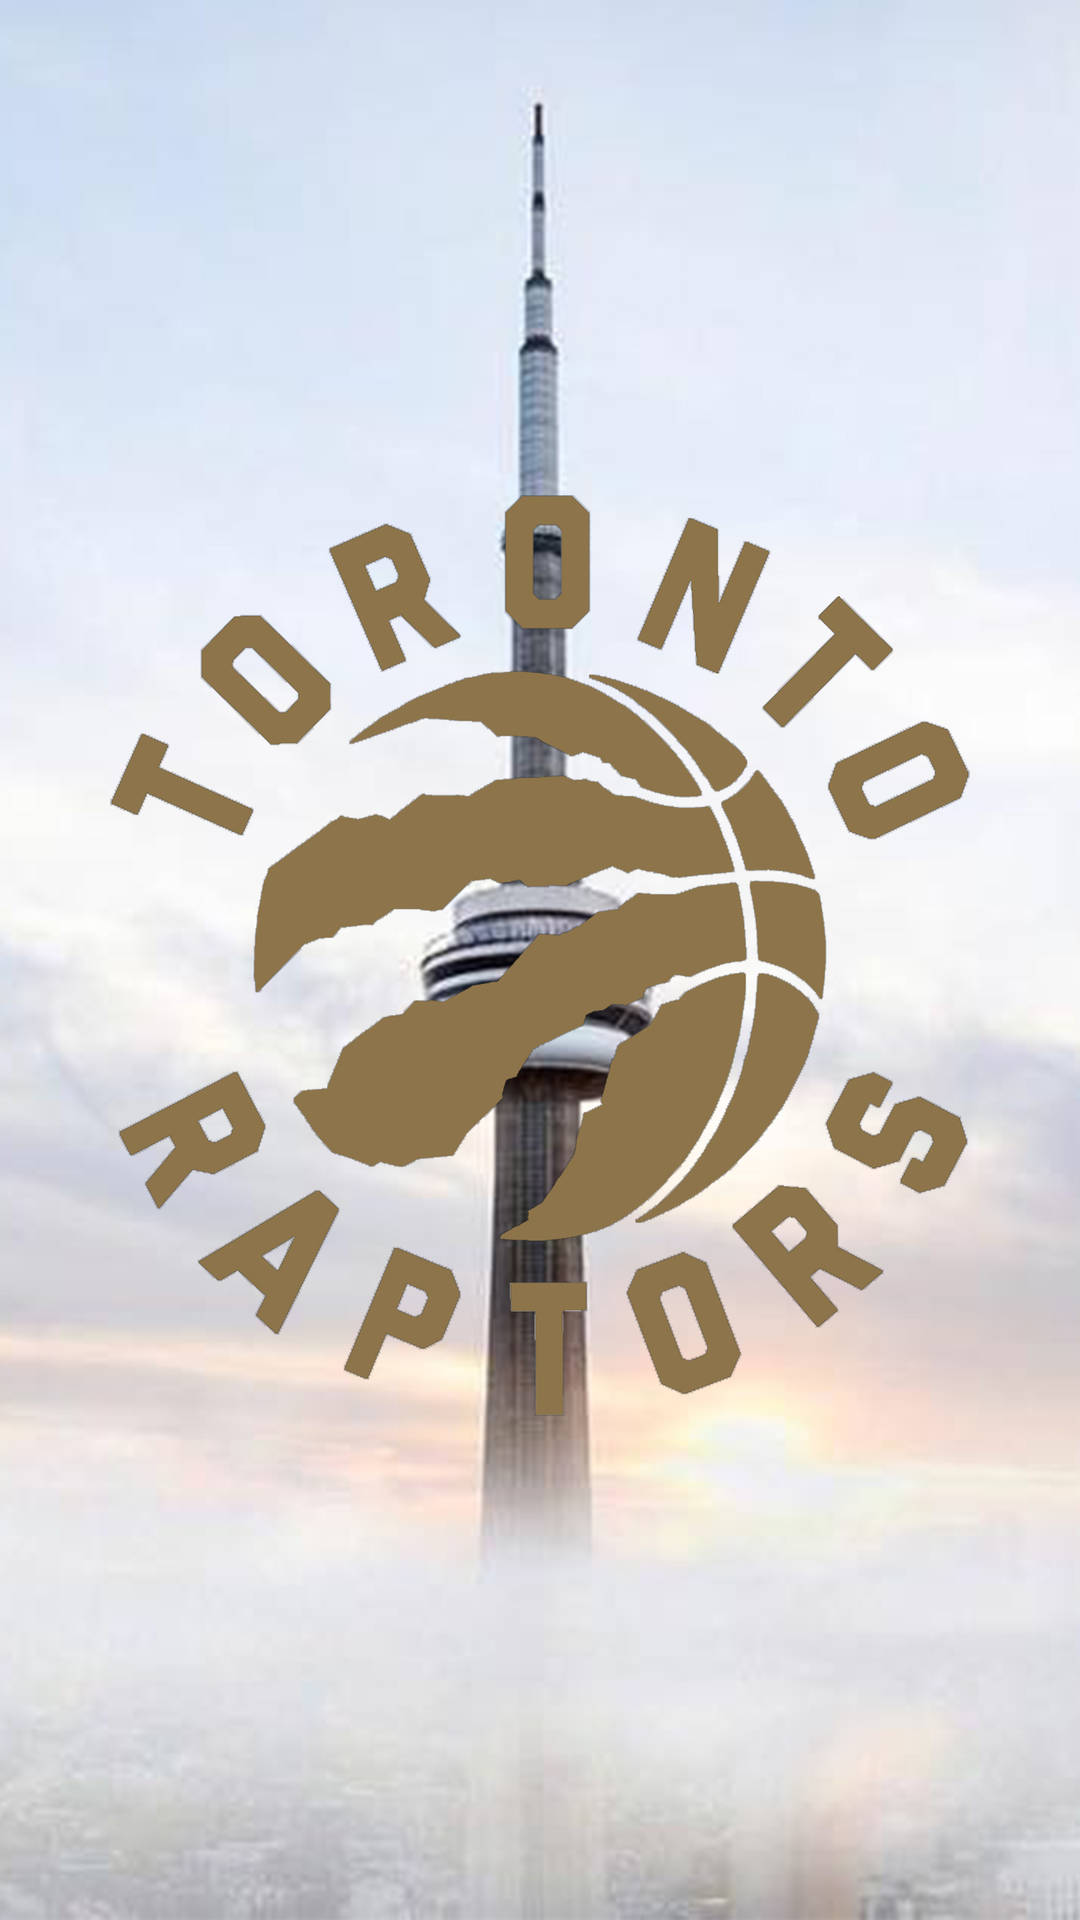 Toronto Raptors Portrait Image Wallpaper